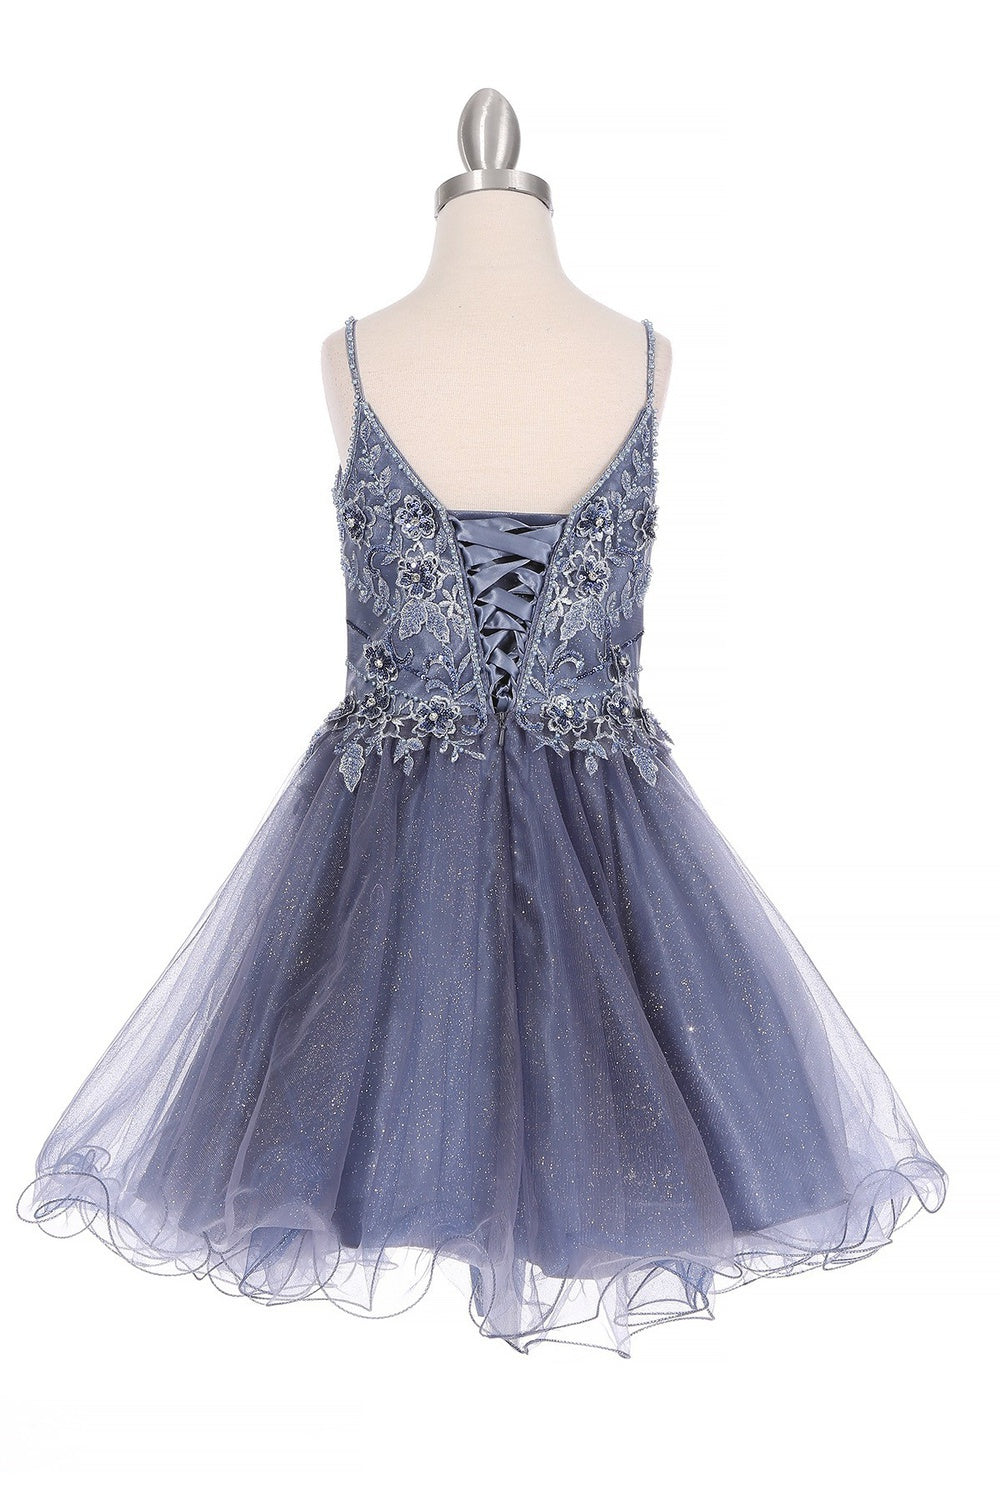 Elegant Illusion Sparkly Tulle A-Line Short Kids Dress CU5112 Elsy Style Kids Dress